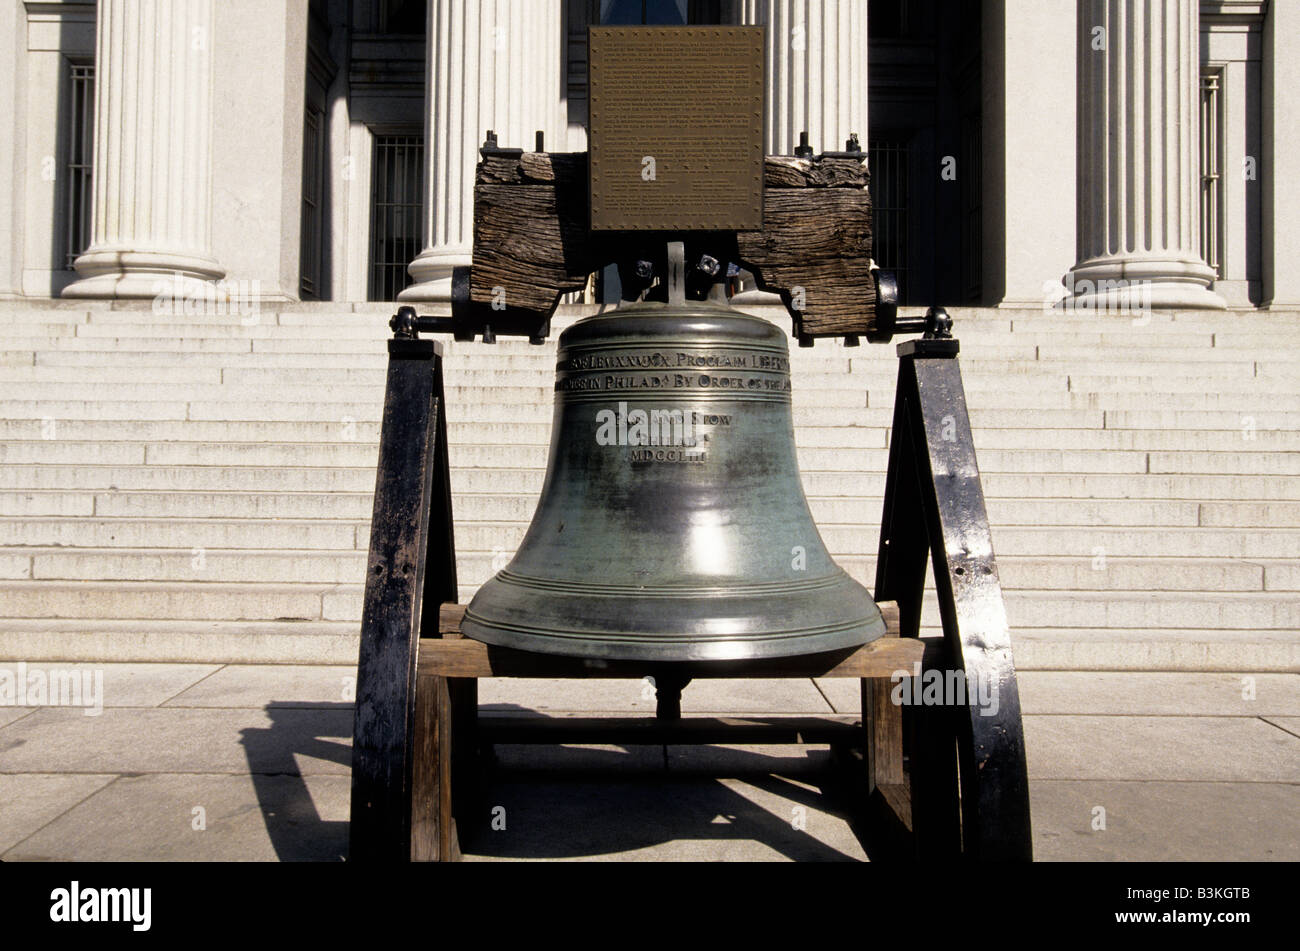 USA-Washington DC Treasury Department bauen und Liberty Bell Replica  Stockfotografie - Alamy